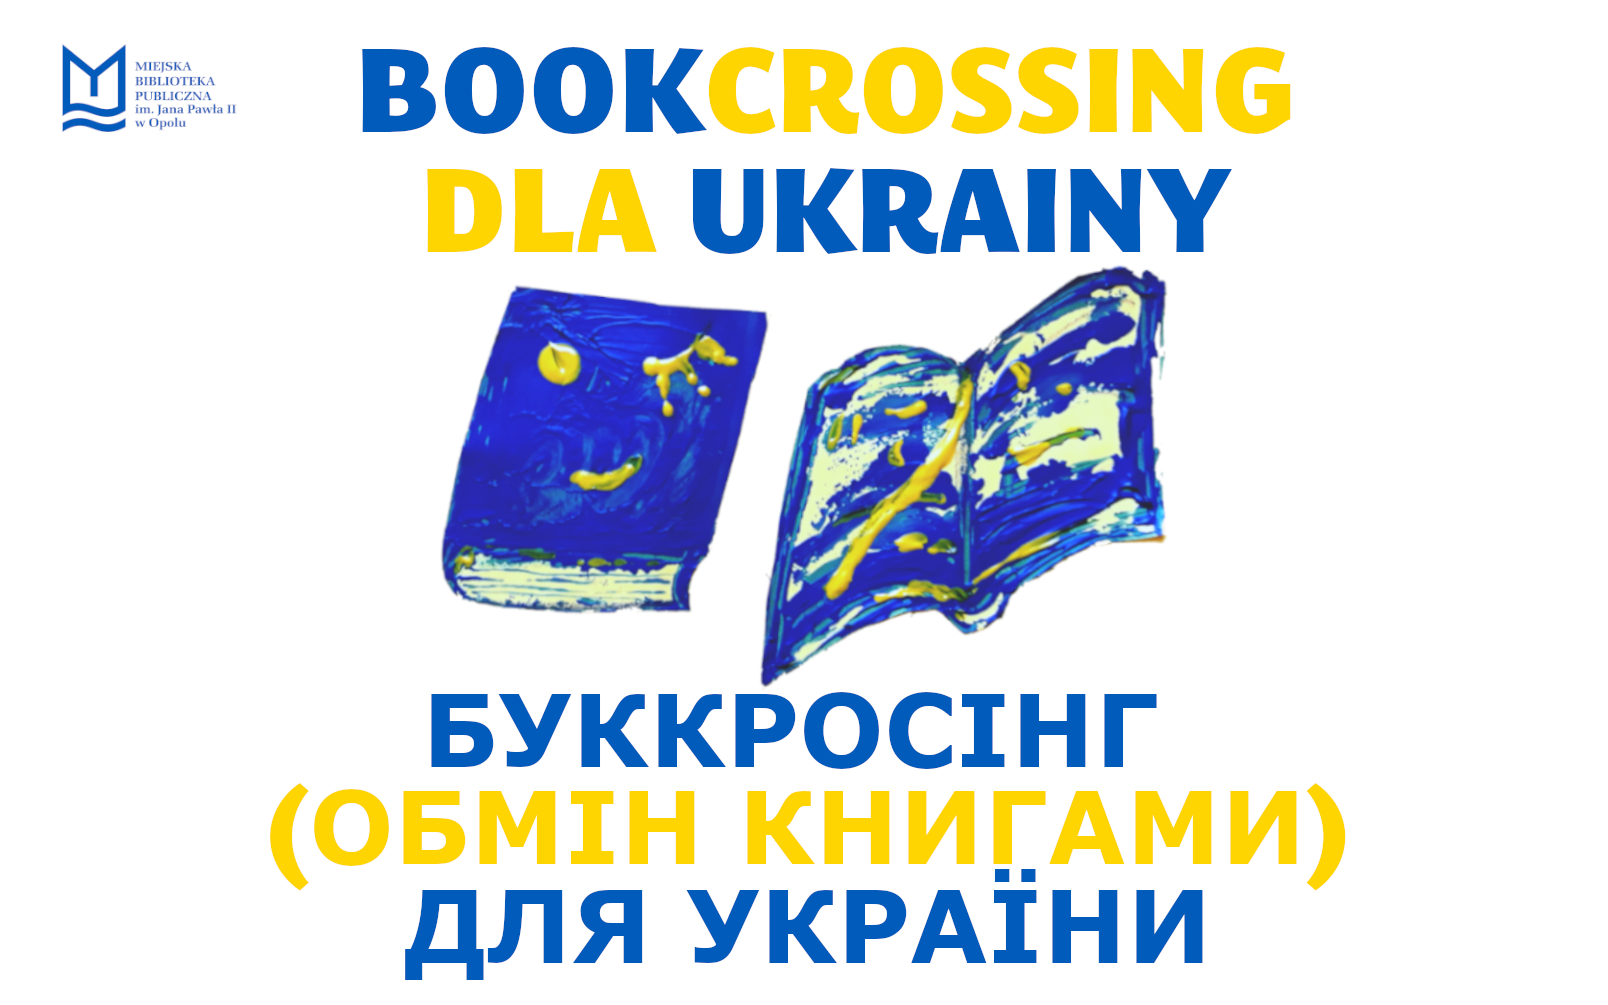 You are currently viewing Буккросінг (обмін книгами) для України / Bookcrossing dla Ukrainy